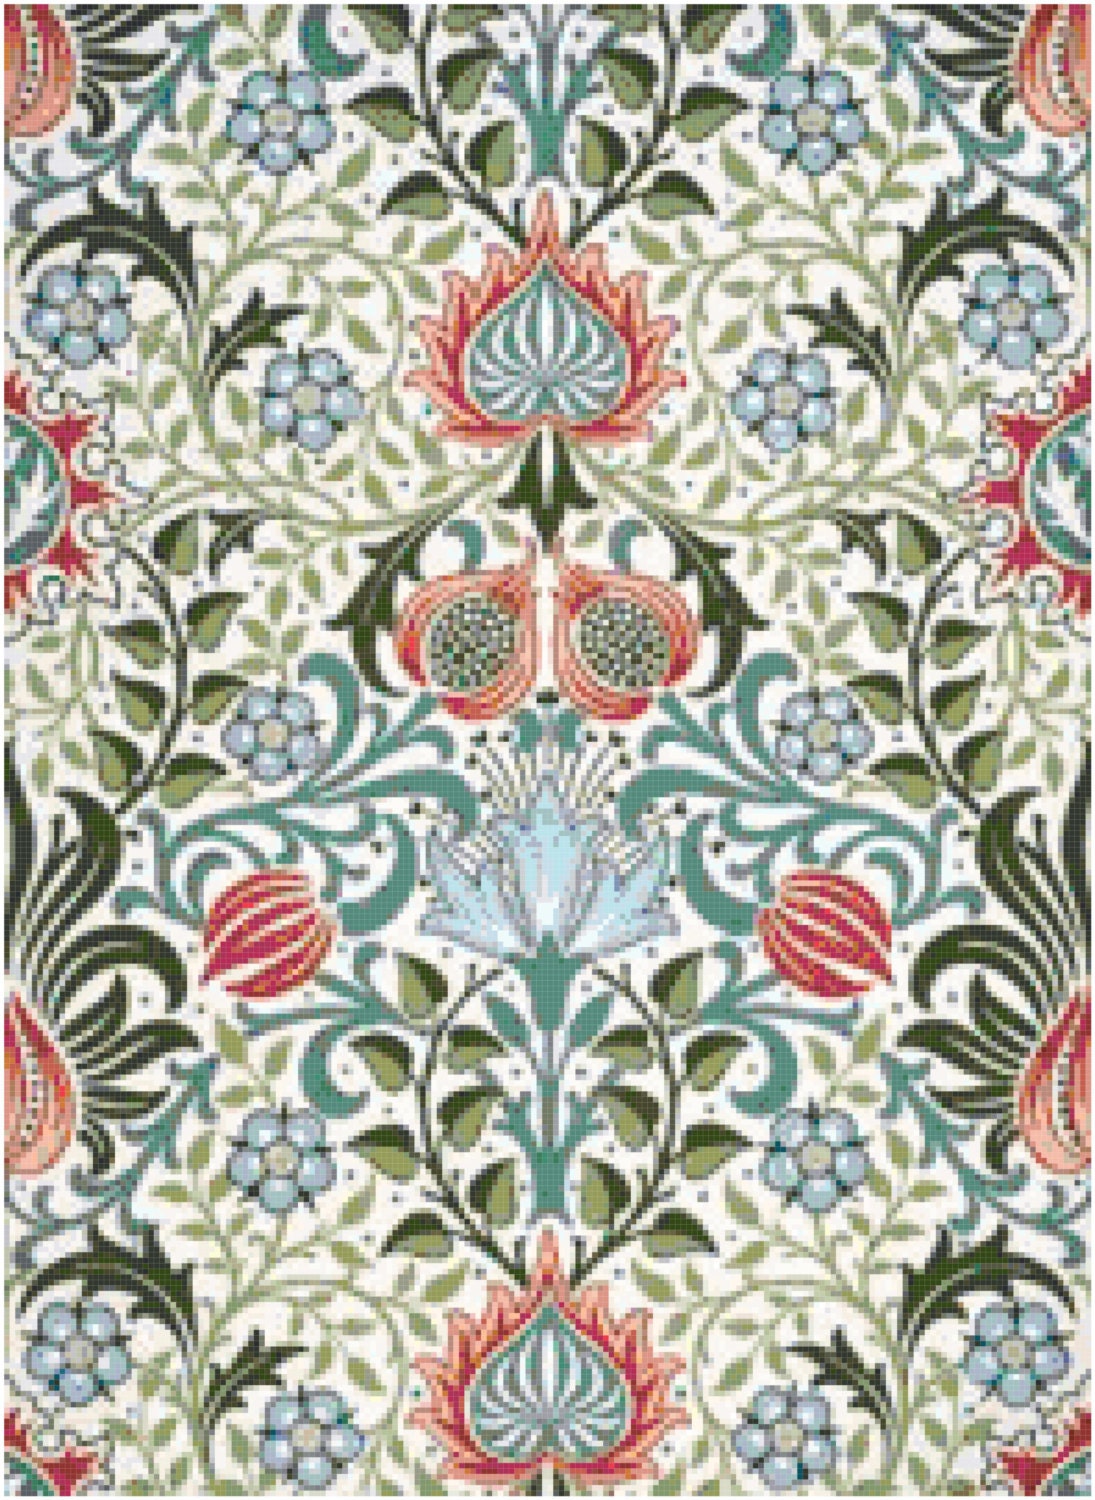 William Morris Persian Wallpaper Design Counted Cross Stitch Afalchi Free images wallpape [afalchi.blogspot.com]